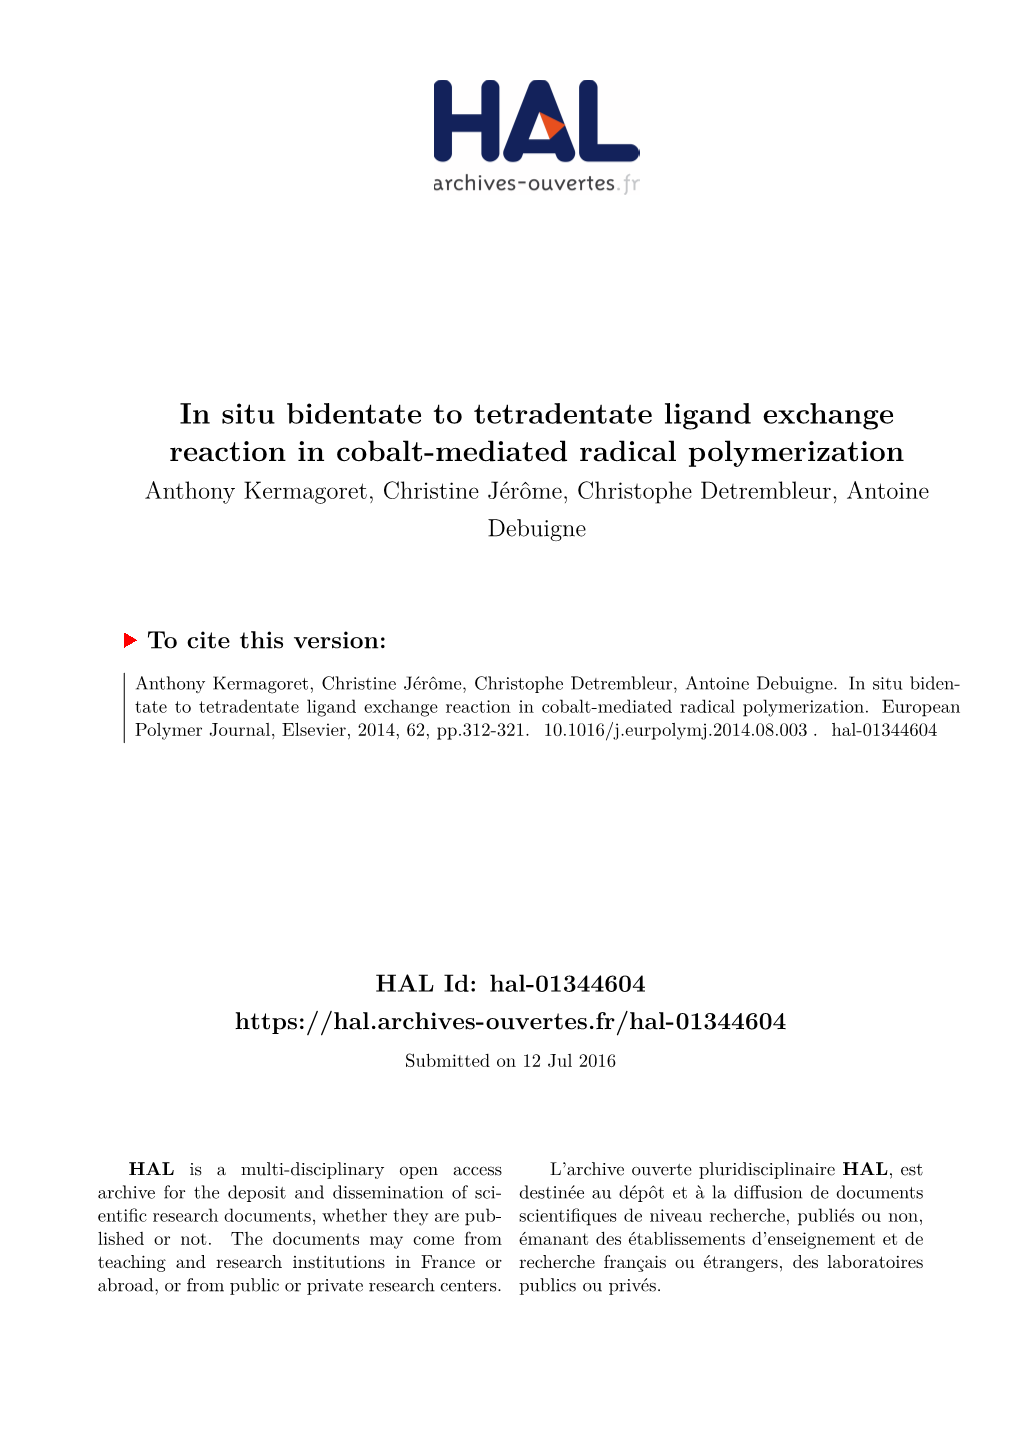 In Situ Bidentate to Tetradentate Ligand Exchange Reaction in Cobalt